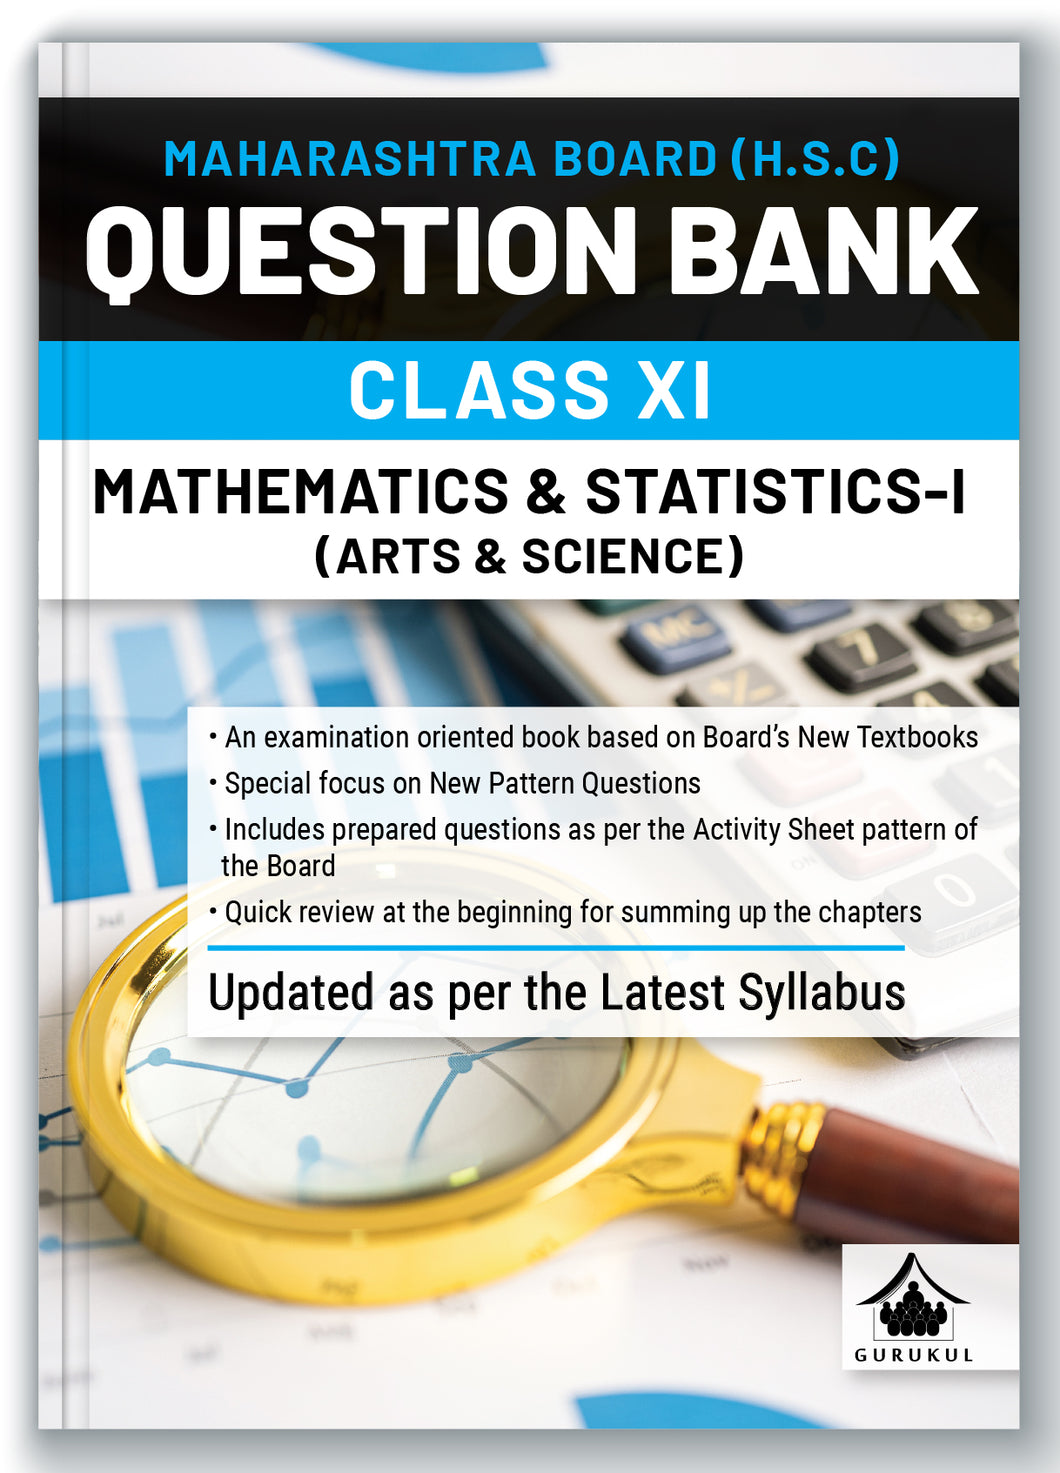 Gurukul H.S.C Mathematics & Statistics - I Question Bank for MH Board Class 11